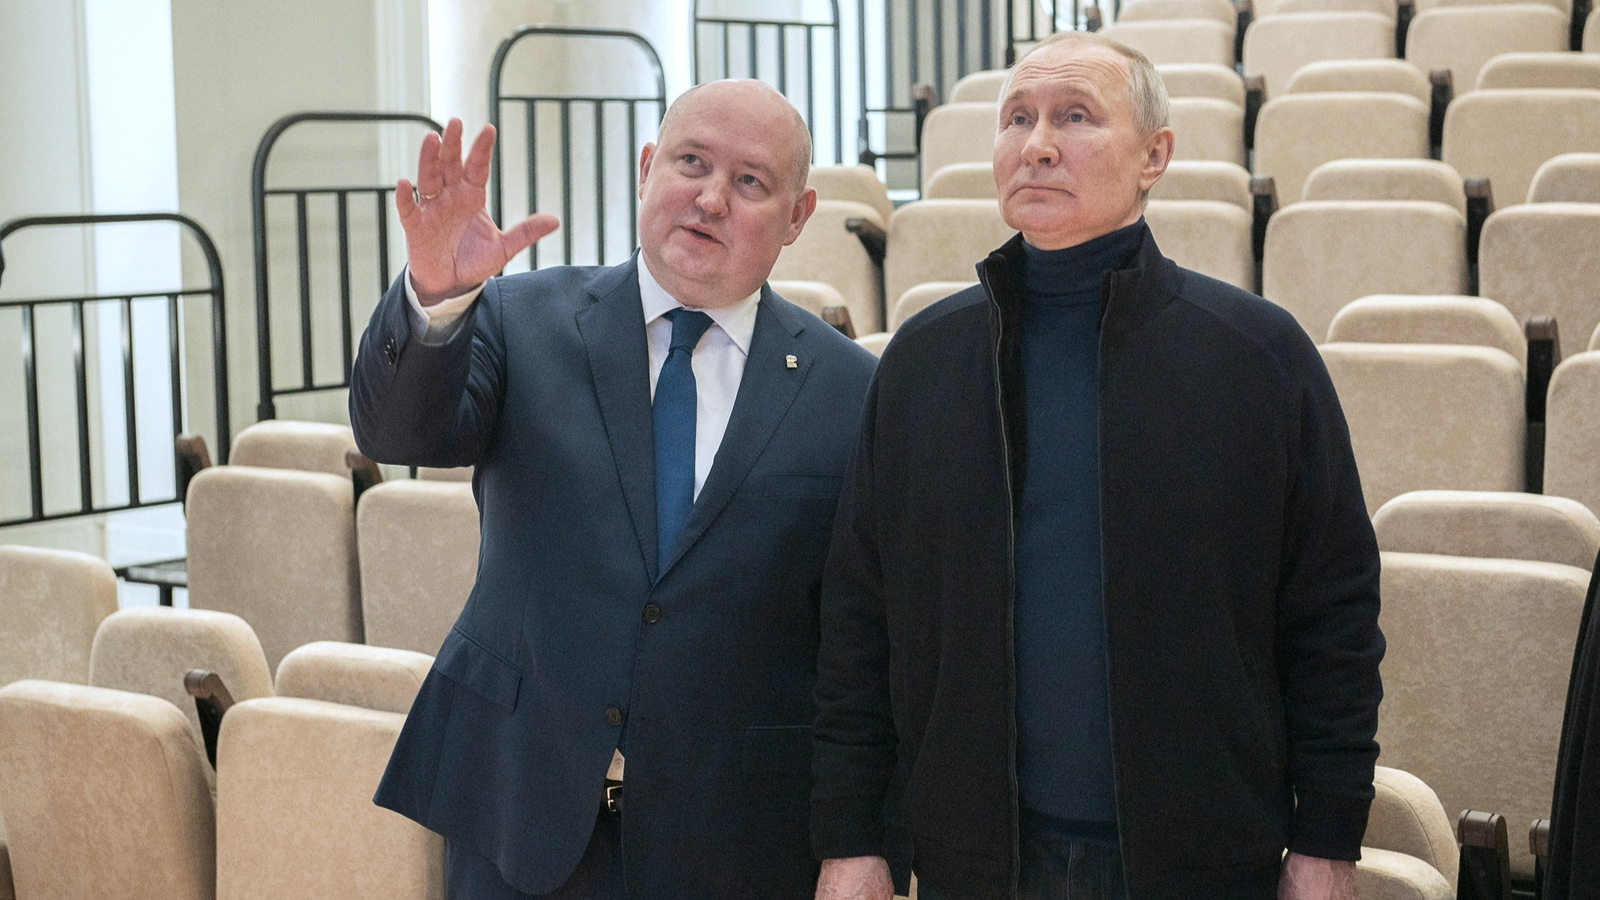 Russian President Vladimir Putin and Governor of Sevastopol Mikhail Razvozhayev visit a children's arts and aesthetic center. /Reuters via third party